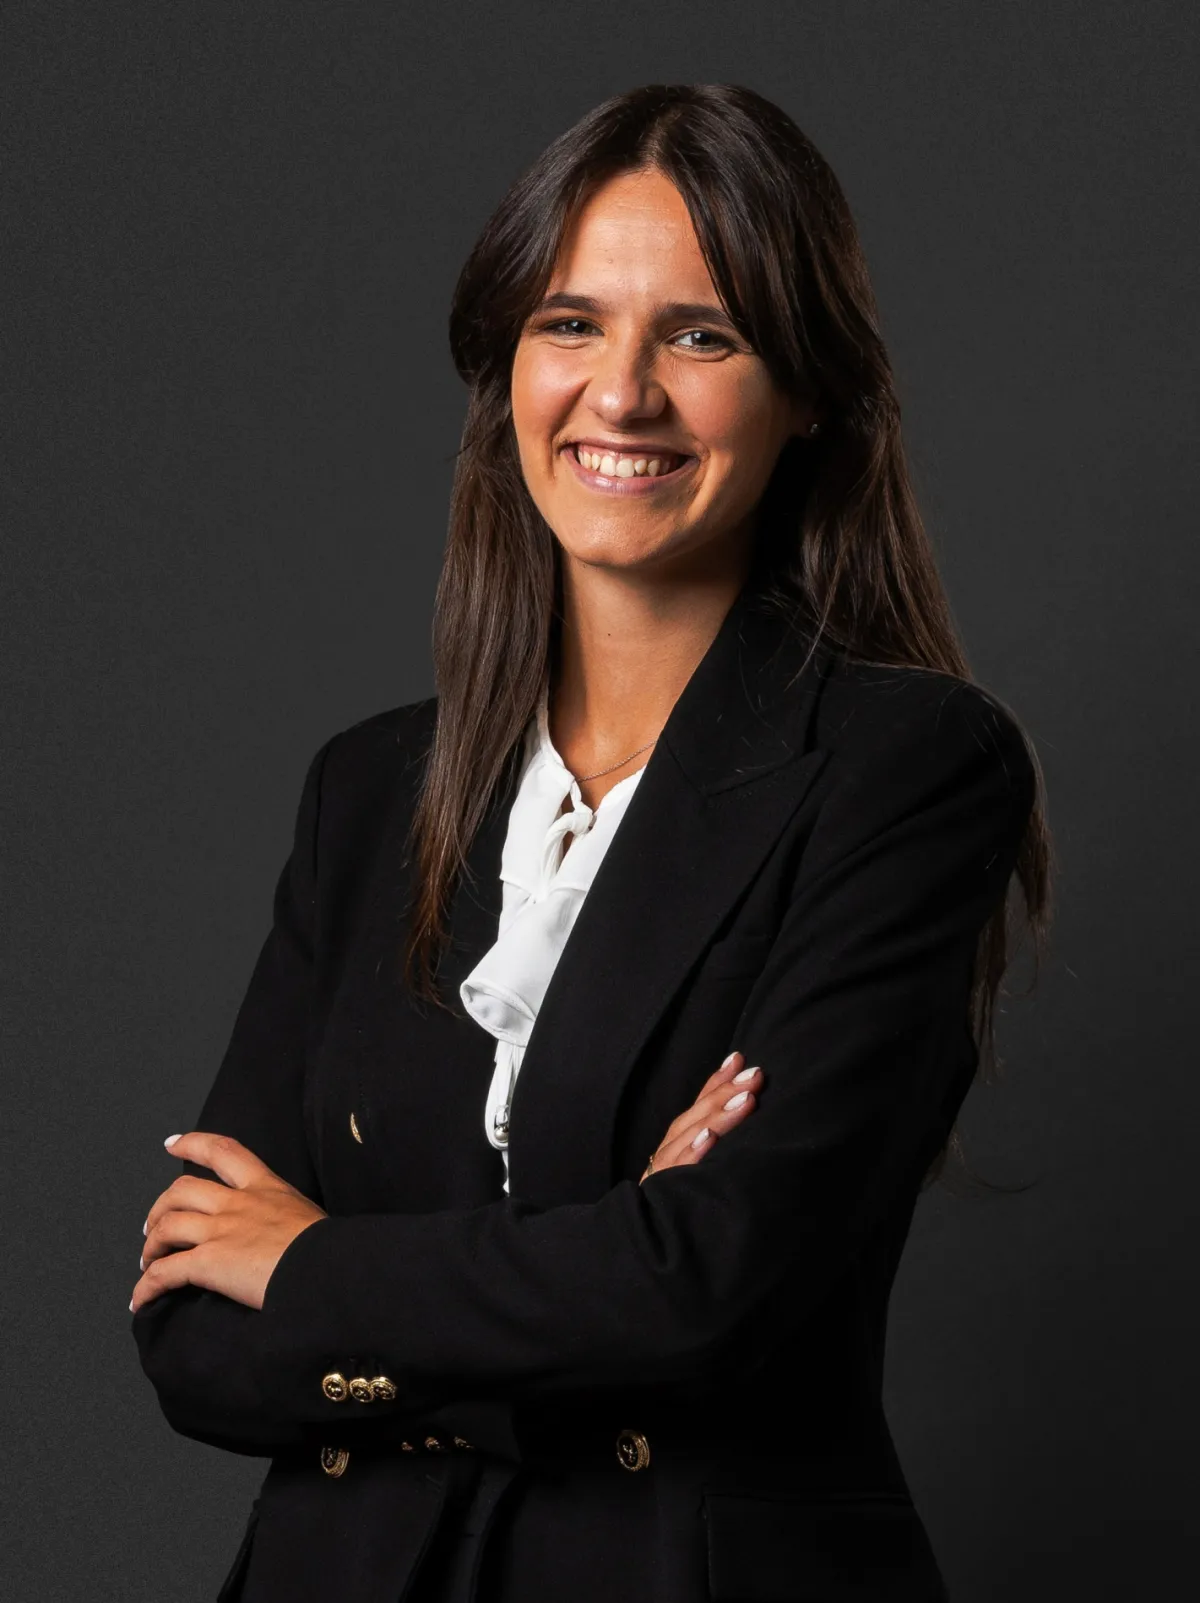 Diana Cunha Silva - Trainee Lawyer